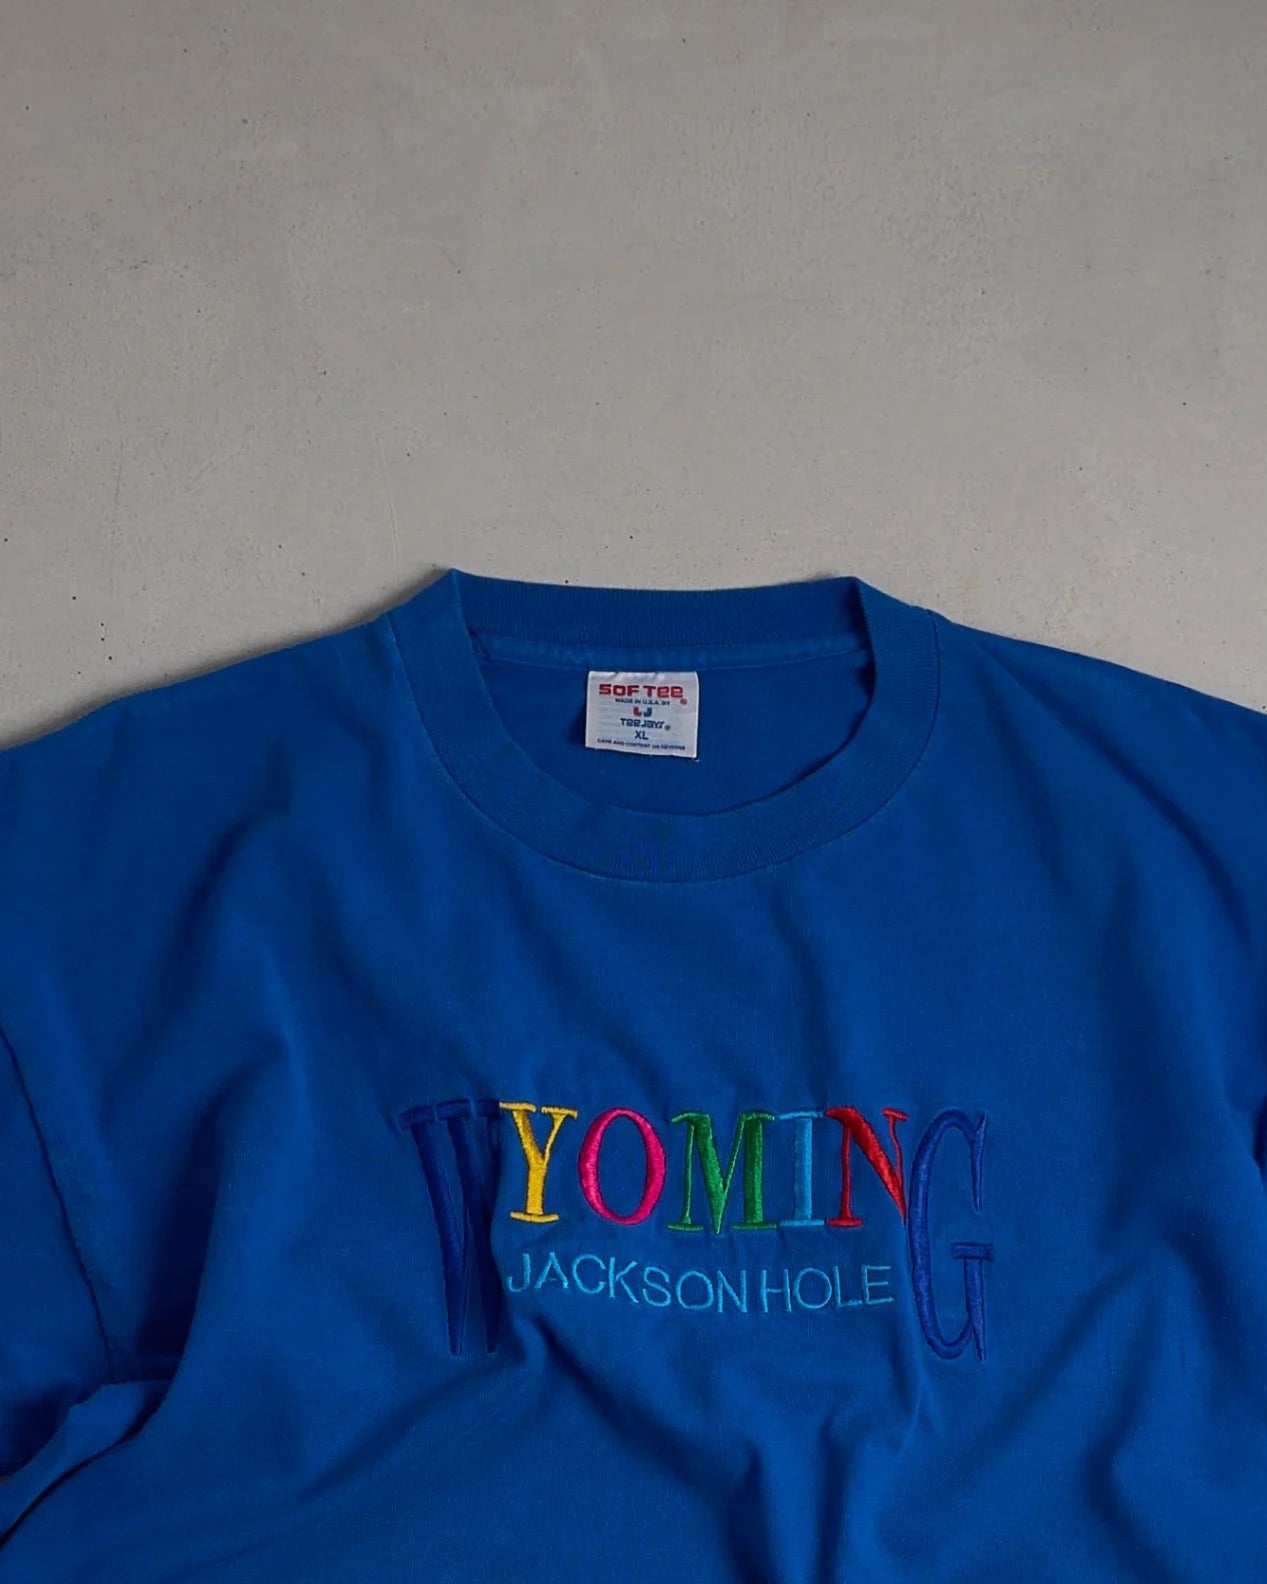 Vintage Wyoming Jackson Hole Single Stitch T-shirt Top